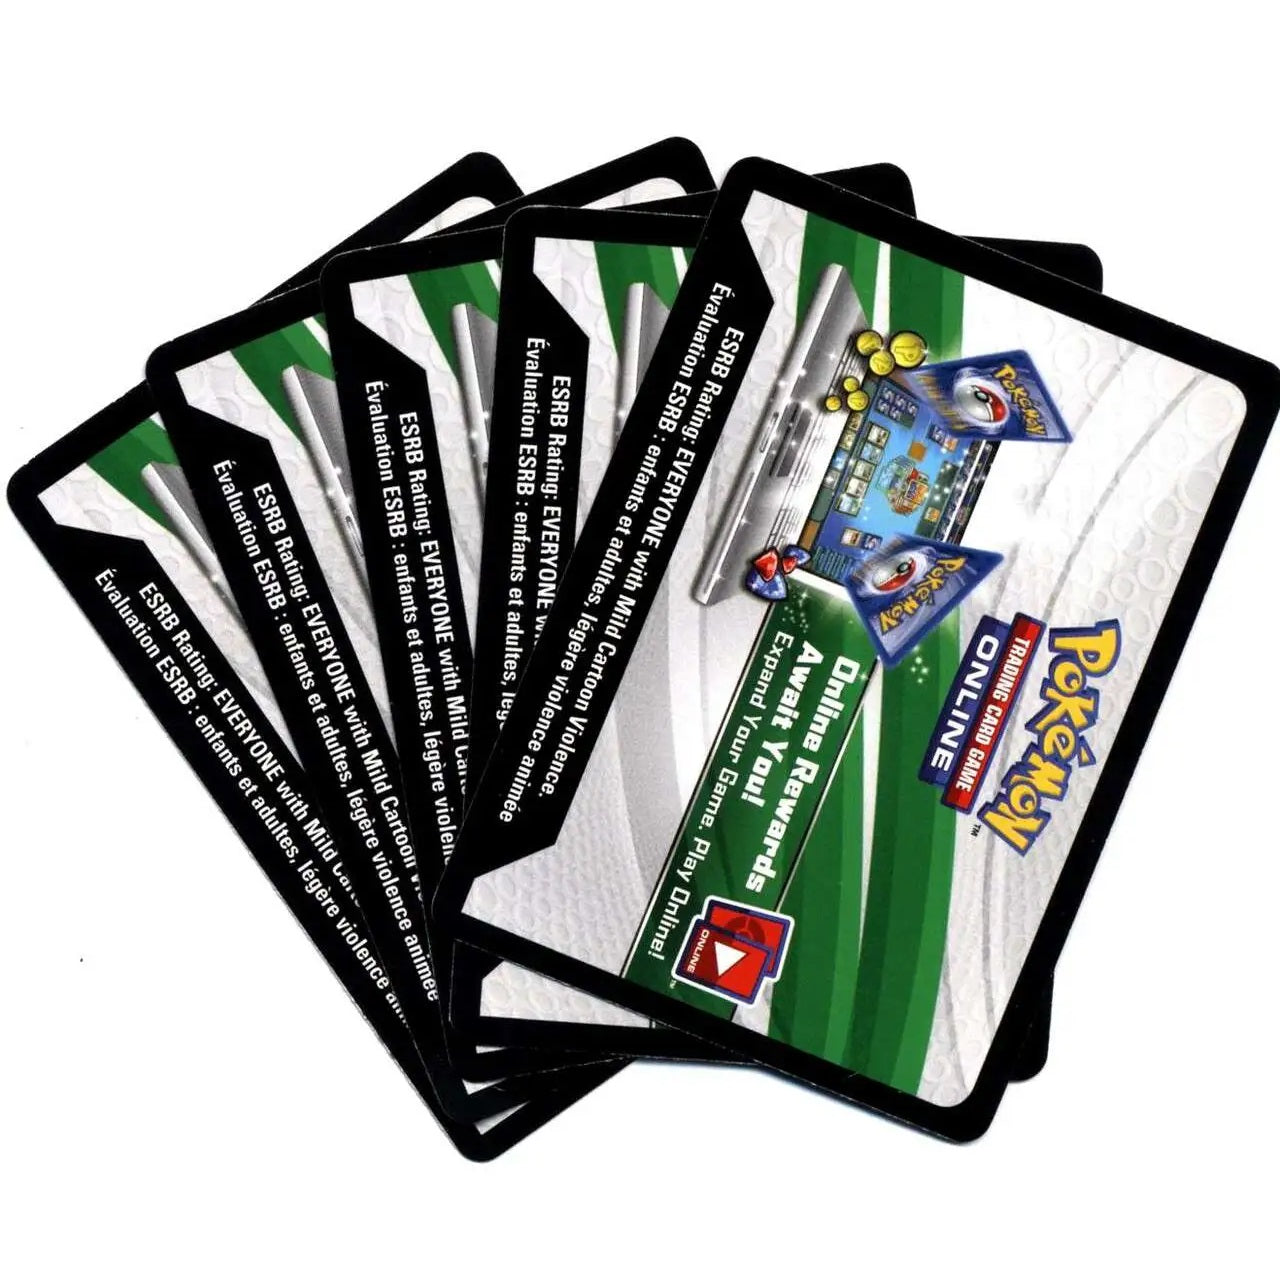 Pokemon TCG Code Card (Random)-The Pokémon Company International-Ace Cards & Collectibles